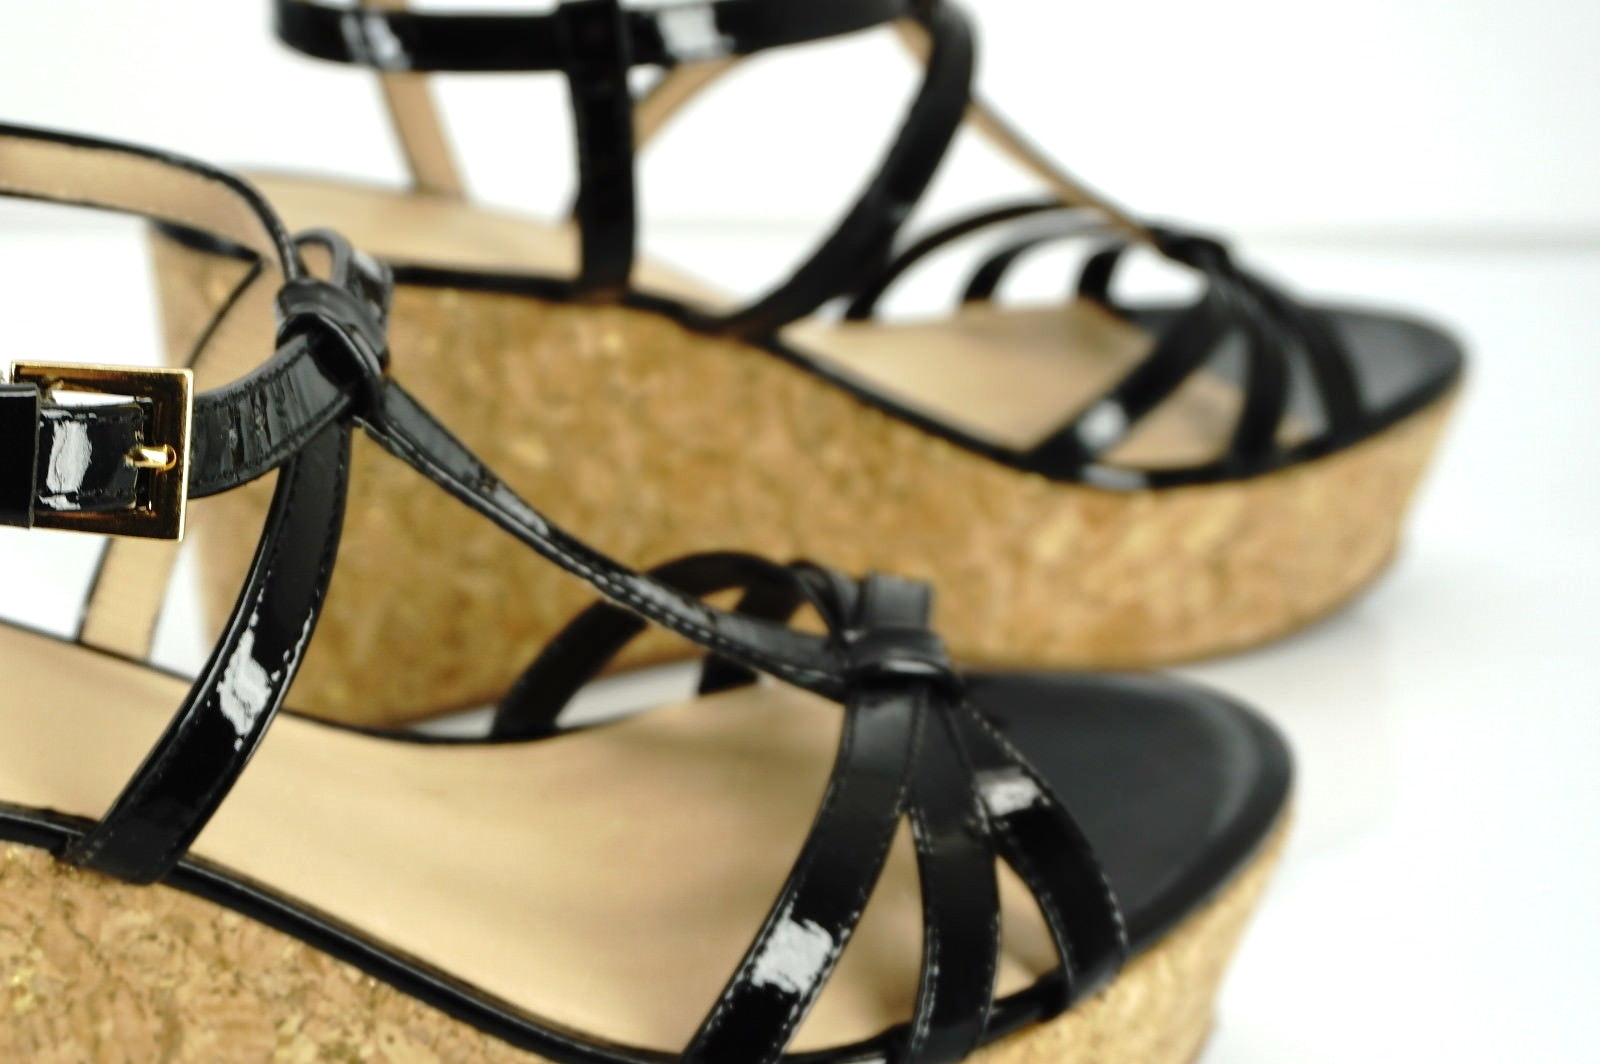 Kate Spade Tropez Patent Platform Cork Wedge T Strap Sandals Size 9.5 New $198